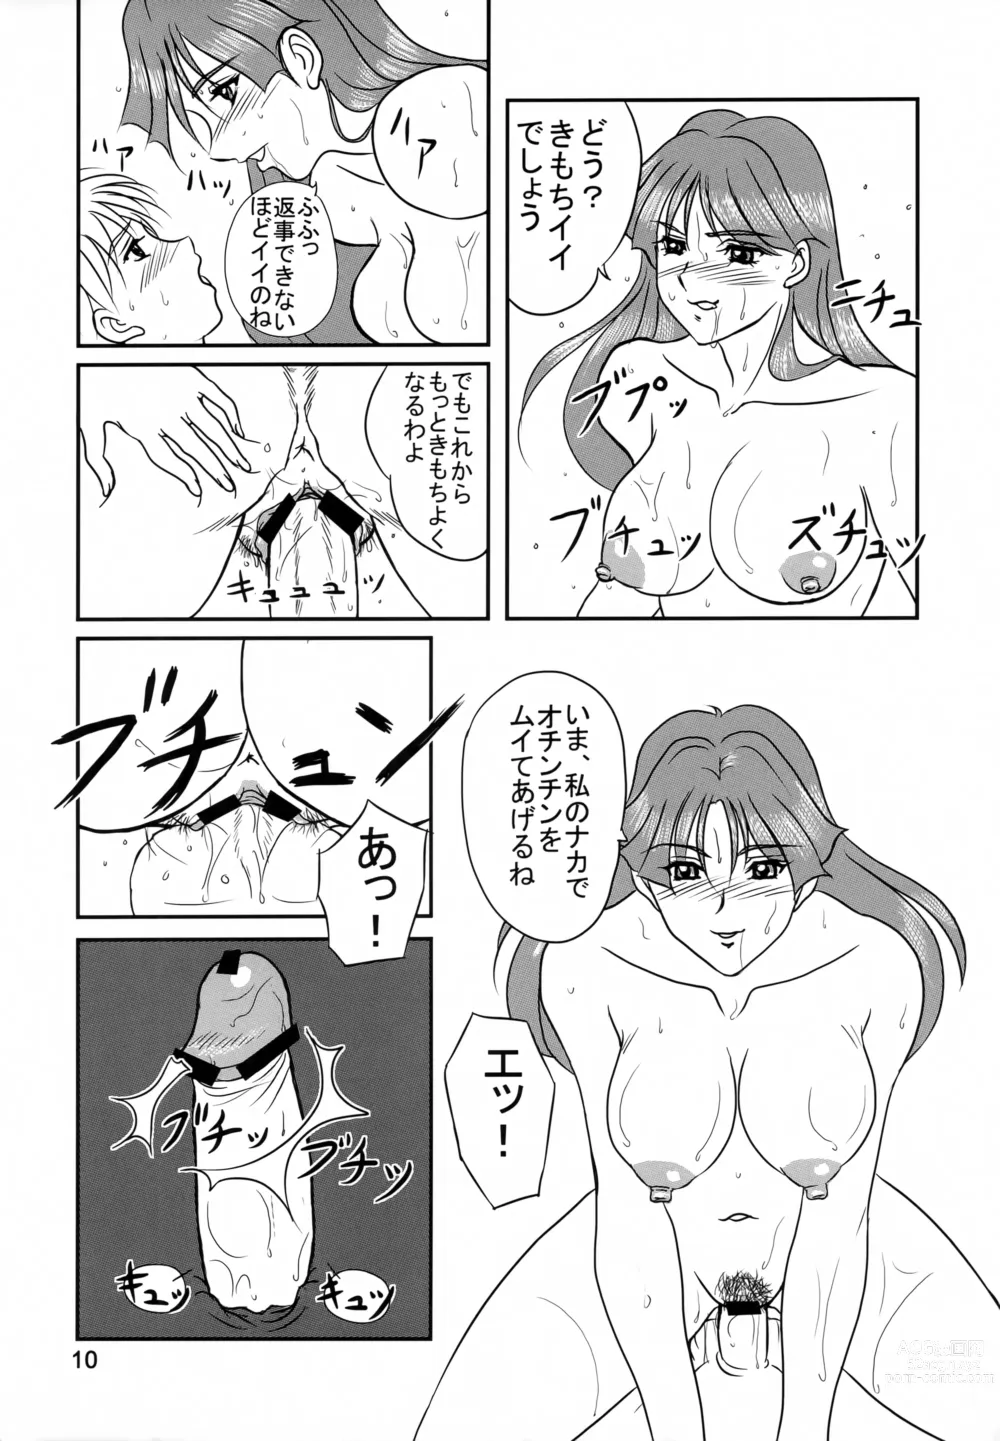 Page 9 of doujinshi EncounteR ~memories~